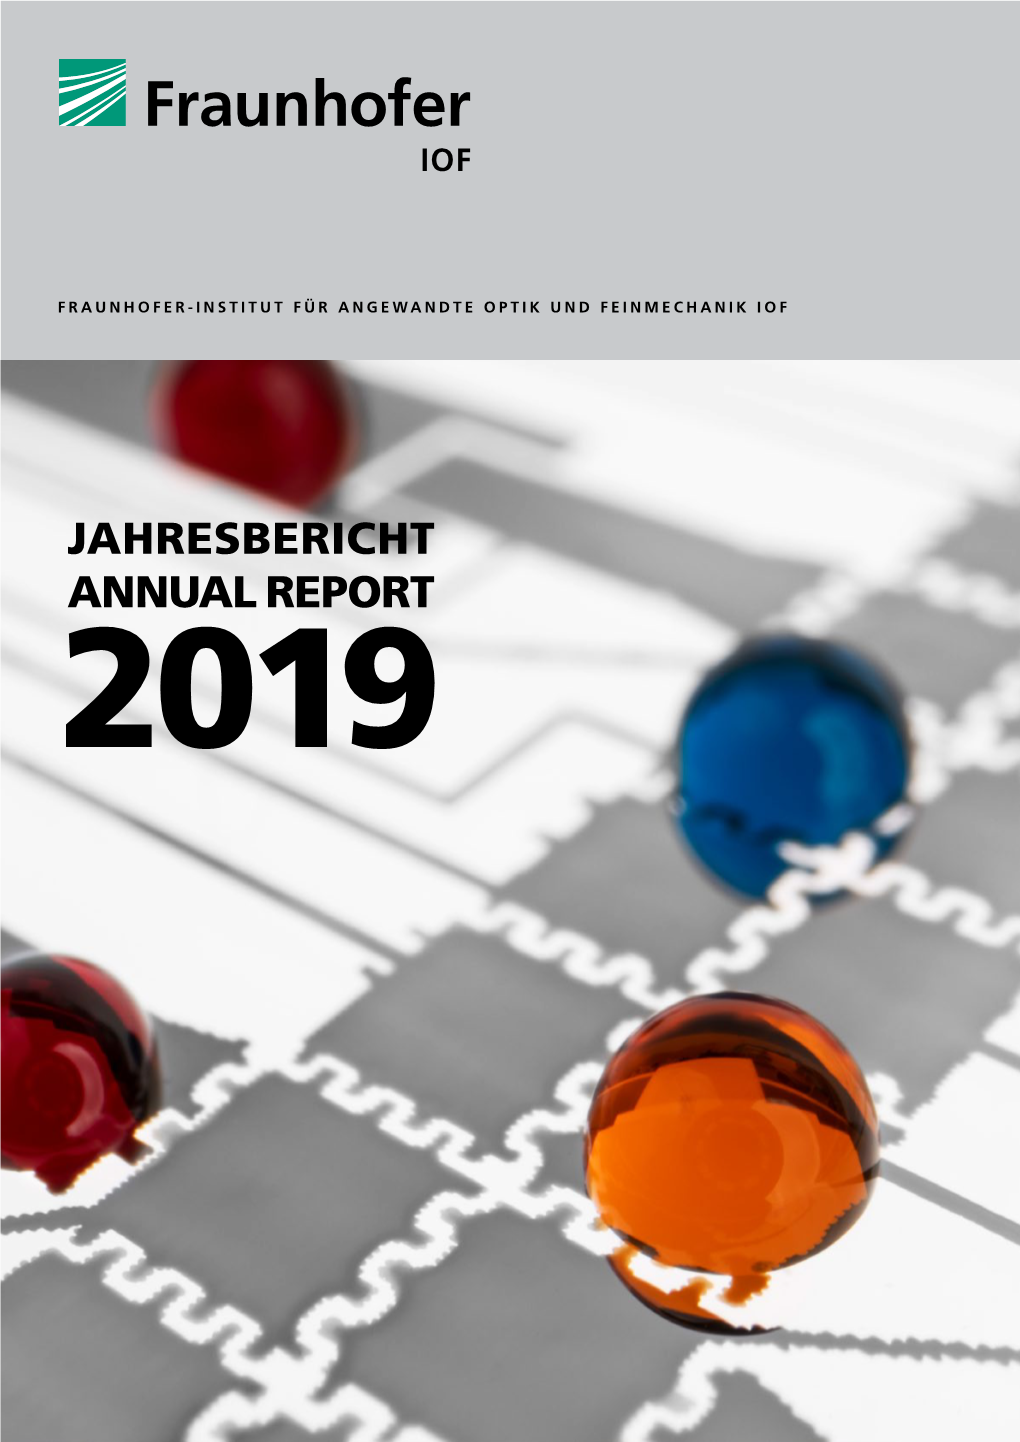 Fraunhofer-Iof-Annual-Report-2019.Pdf